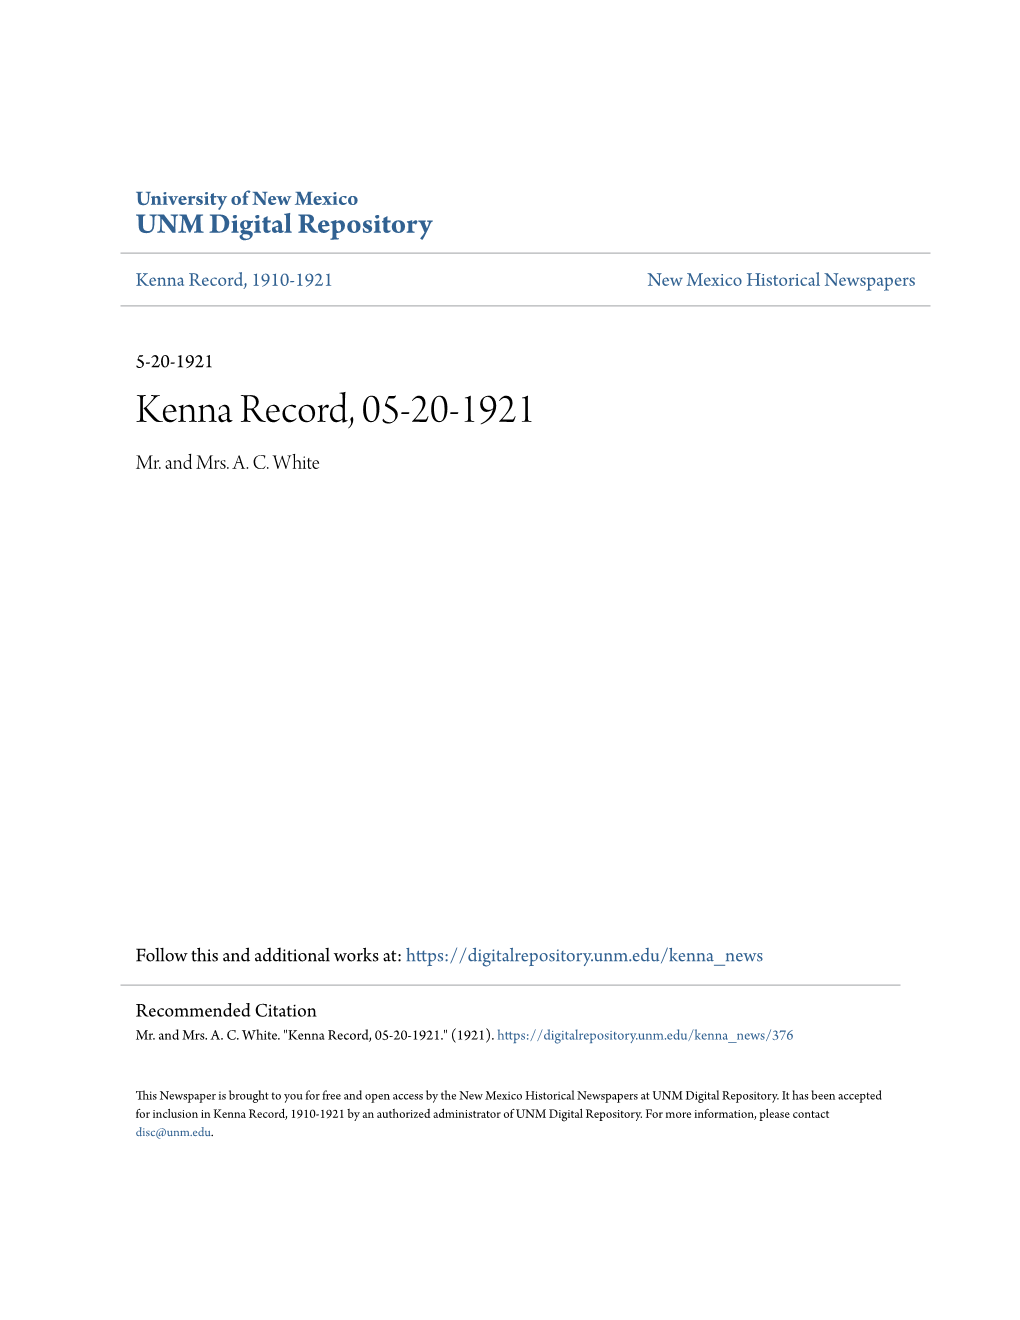 Kenna Record, 05-20-1921 Mr